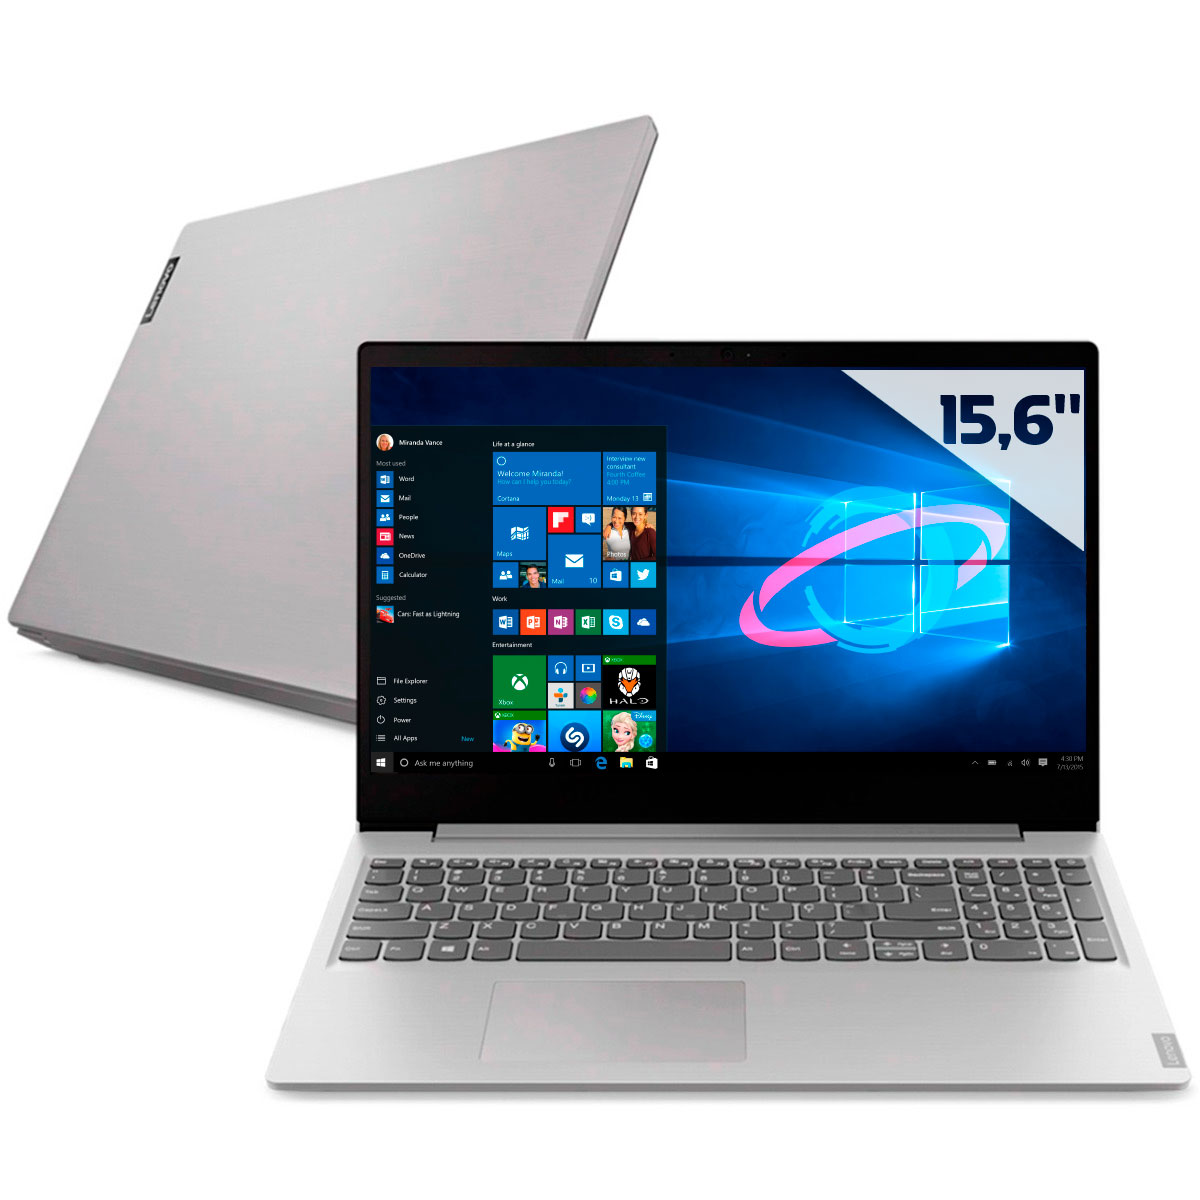 Notebook Lenovo Ideapad S145 - Intel i5 1035G1, 8GB, SSD 256GB, Tela 15.6